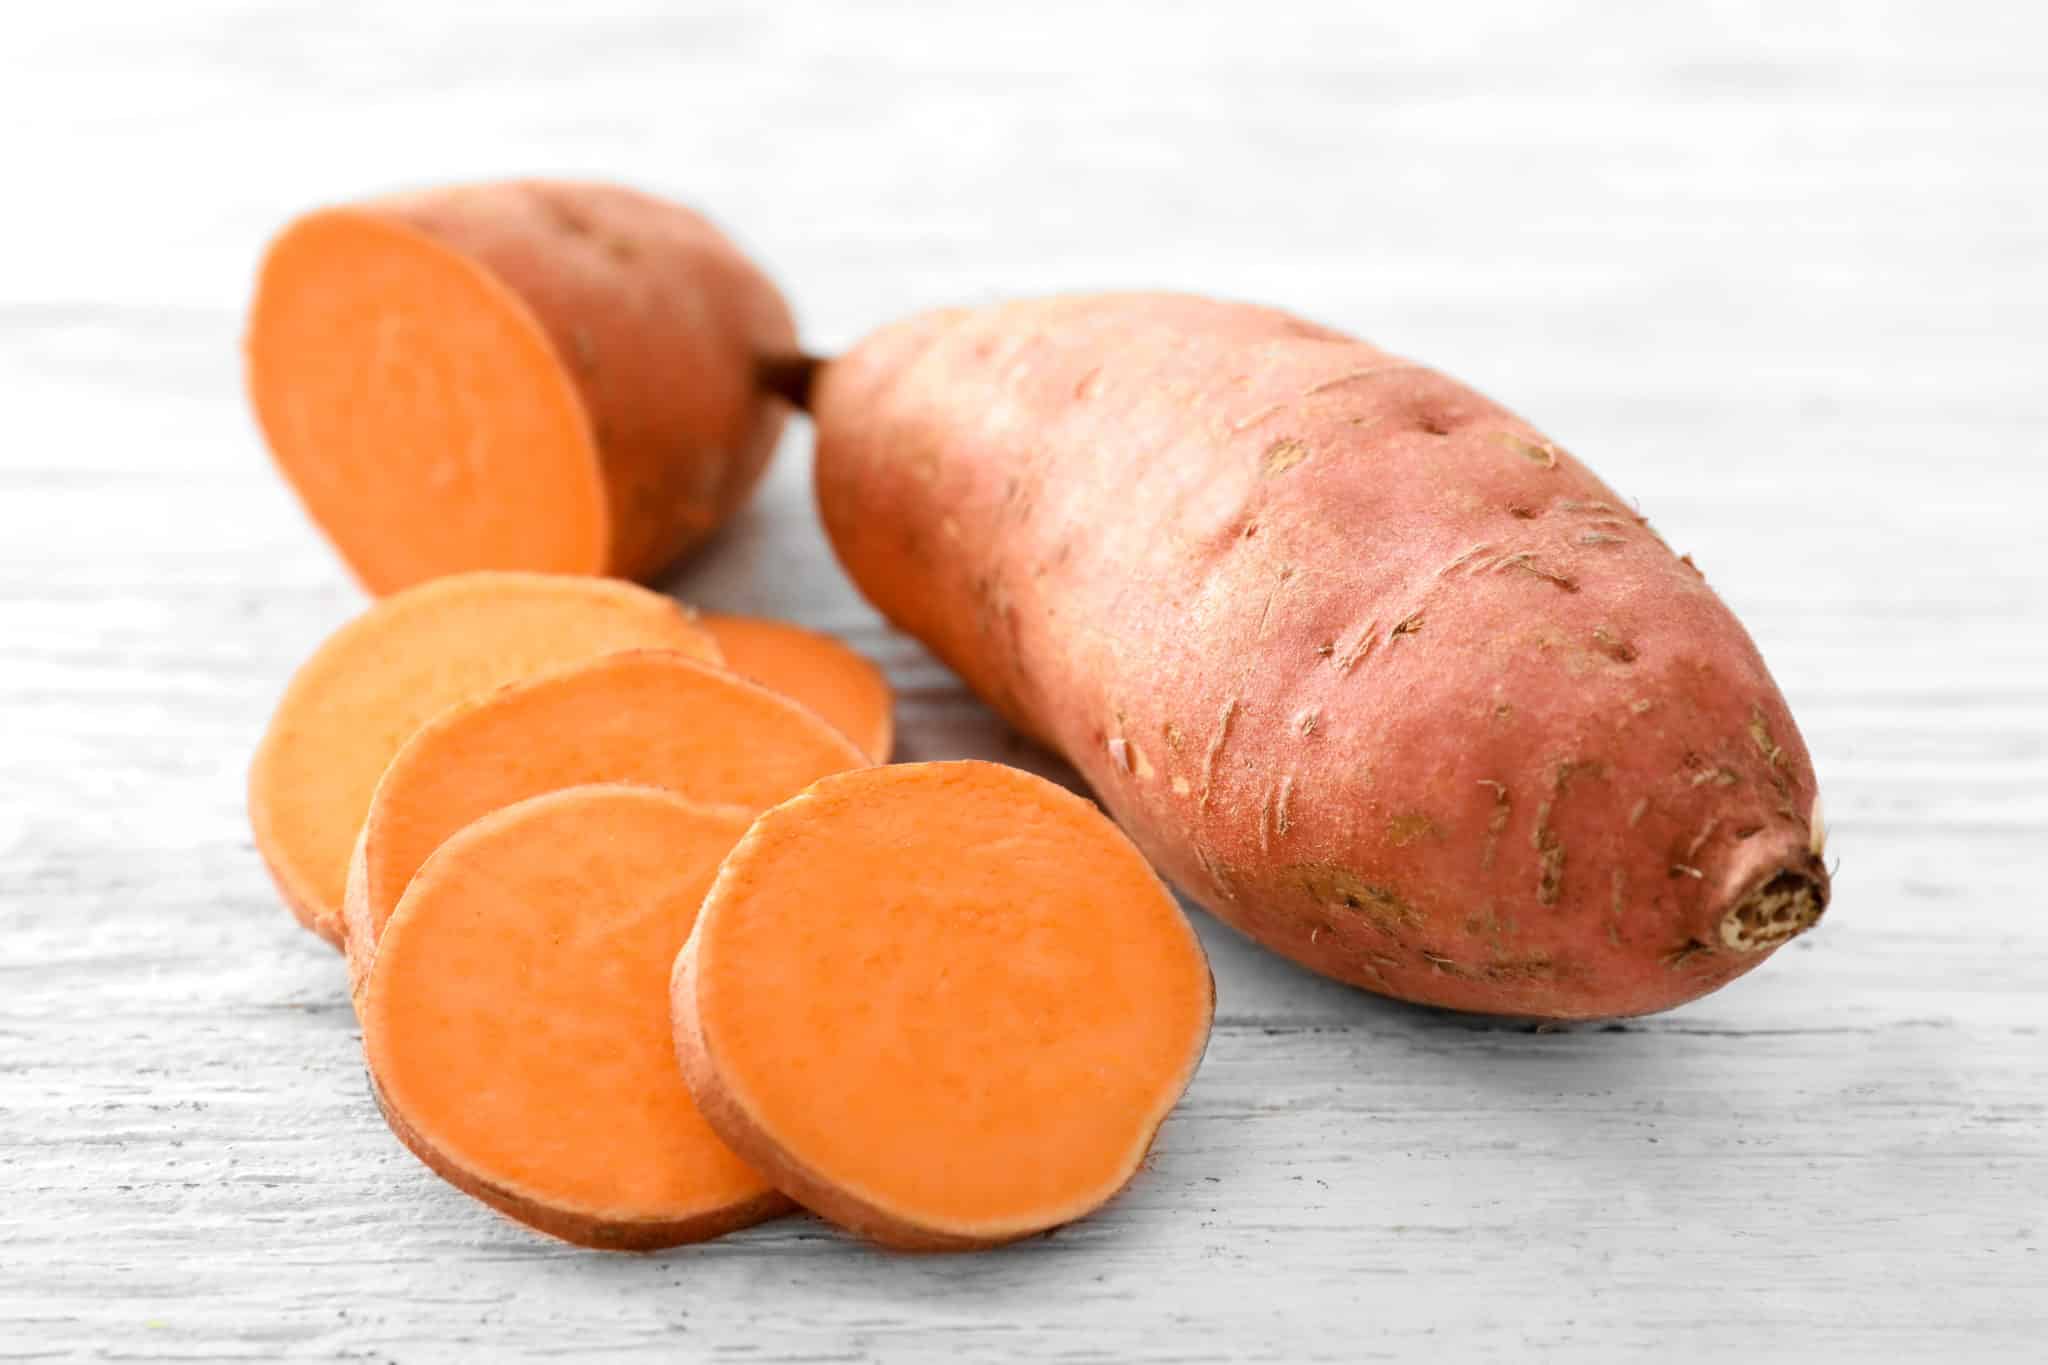 Raw sweet potato on wood table